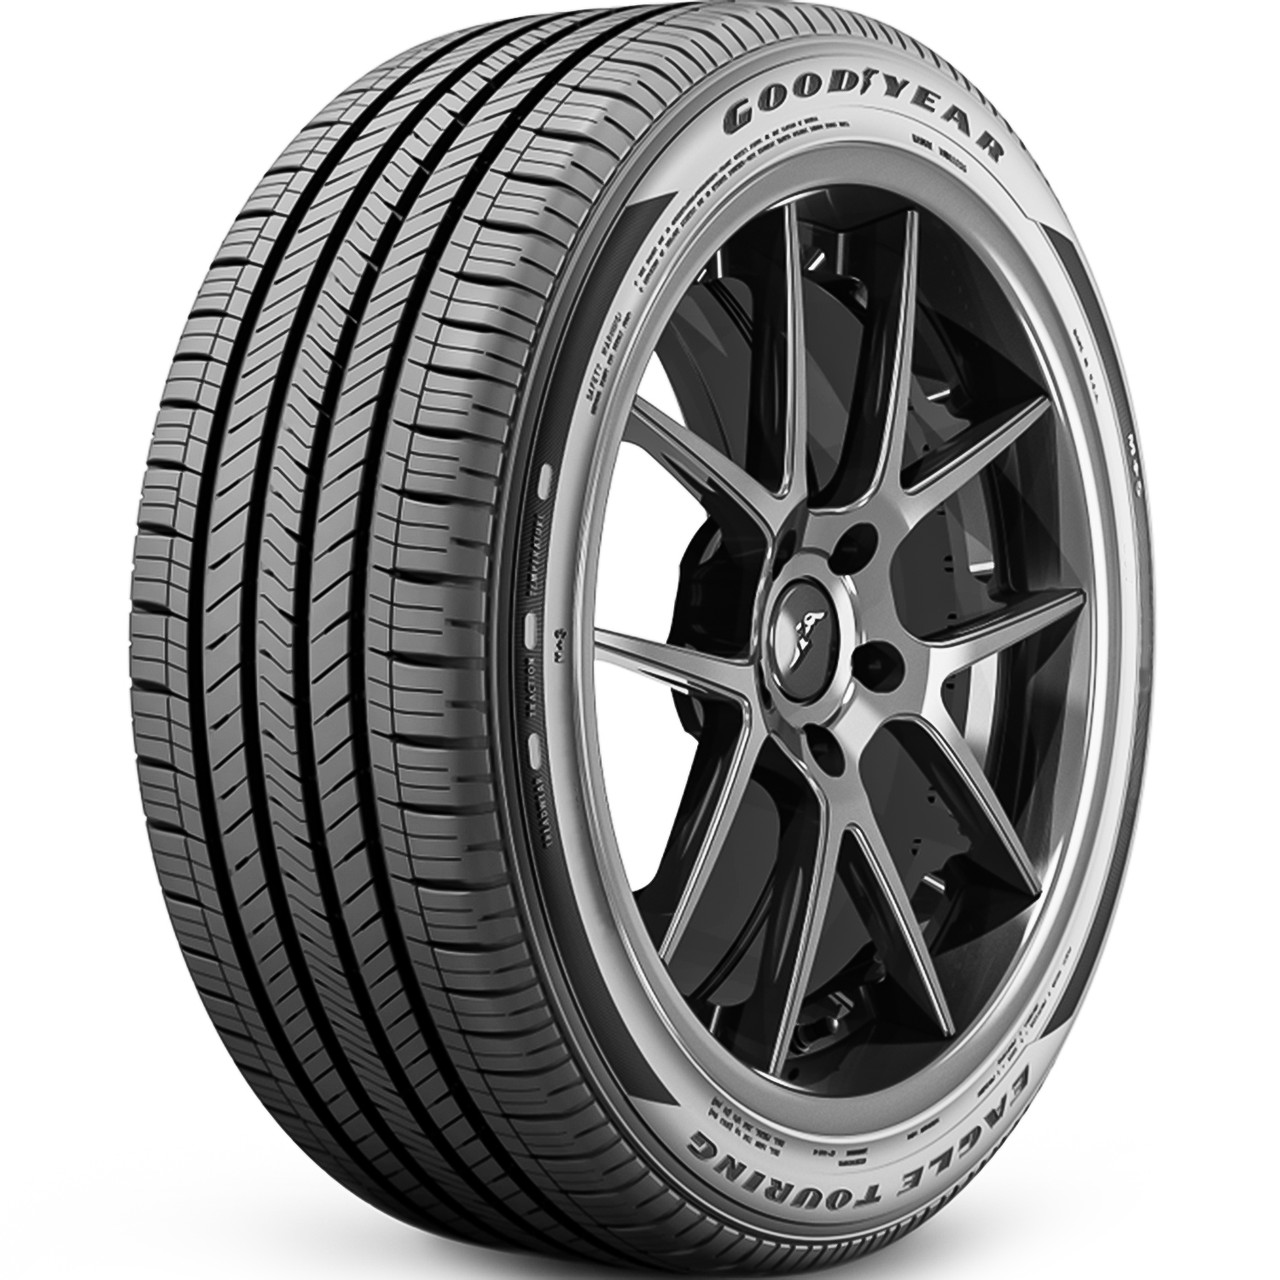 Photos - Tyre Goodyear Eagle Touring 275/40R22, All Season, High Performance tires. 